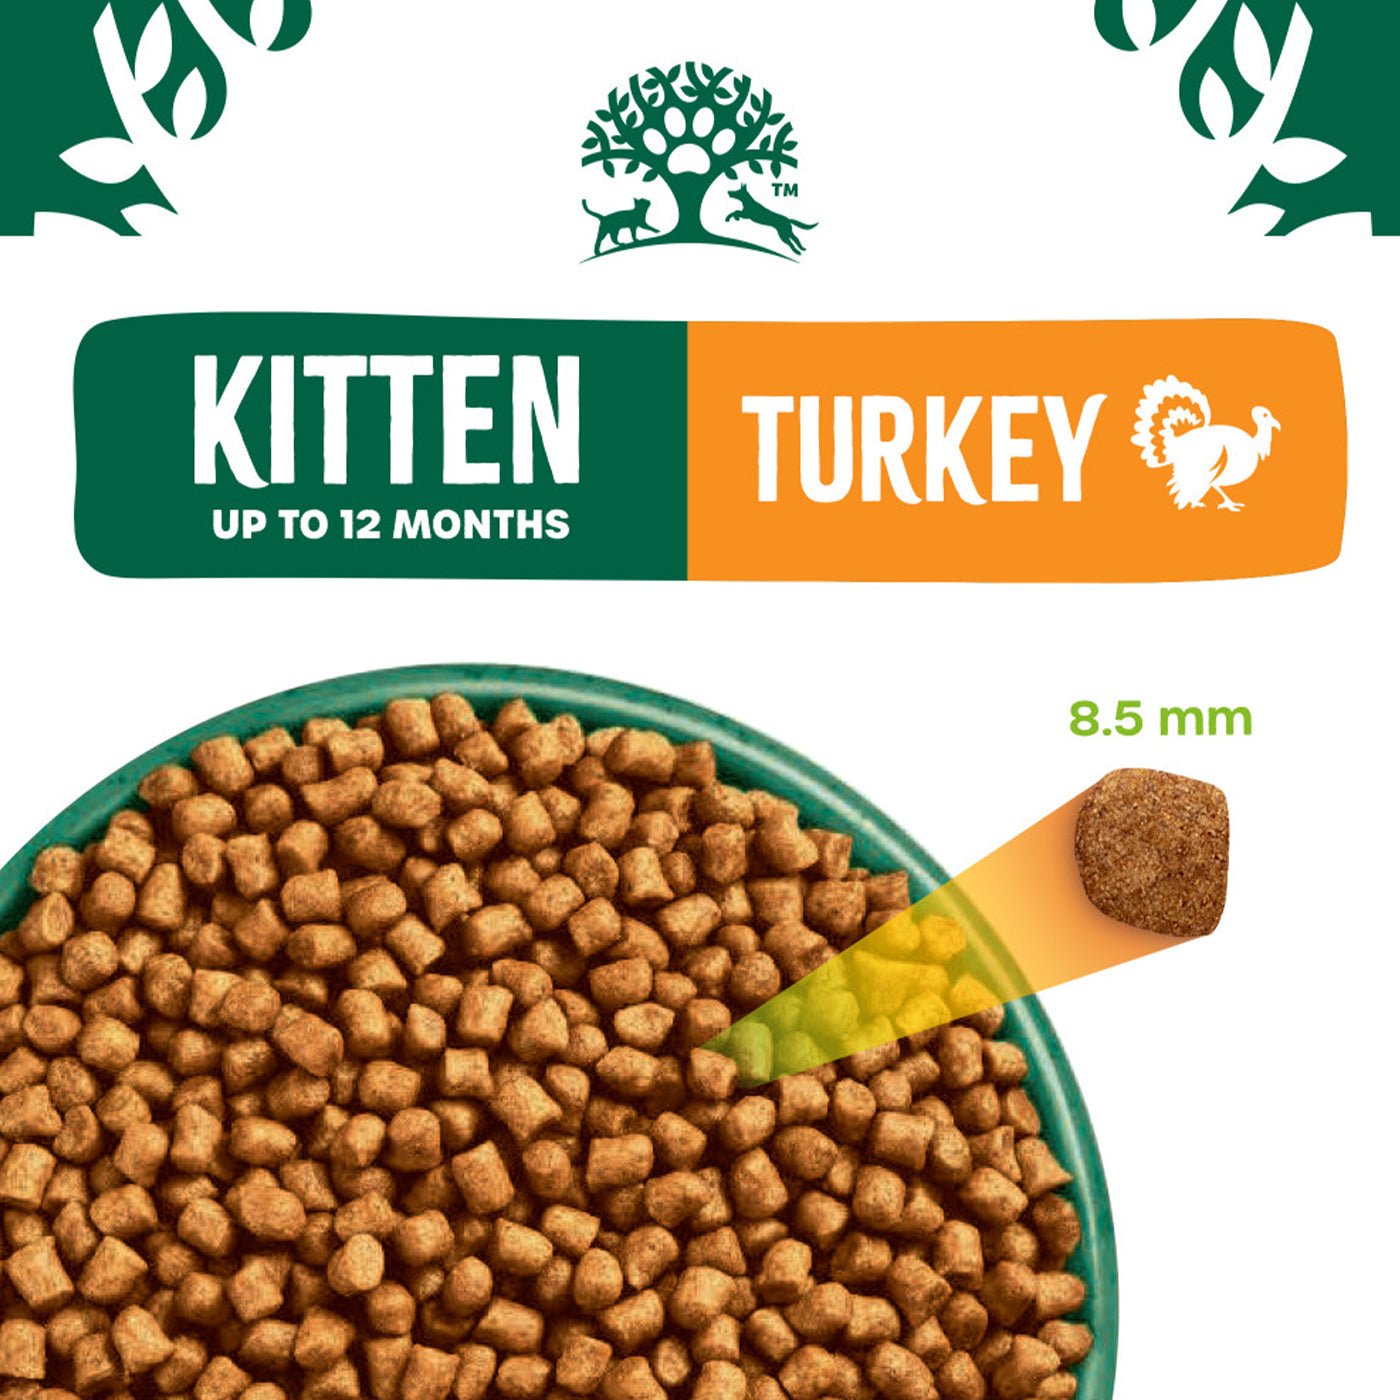 James Wellbeloved Kitten Turkey Food 1.5KG